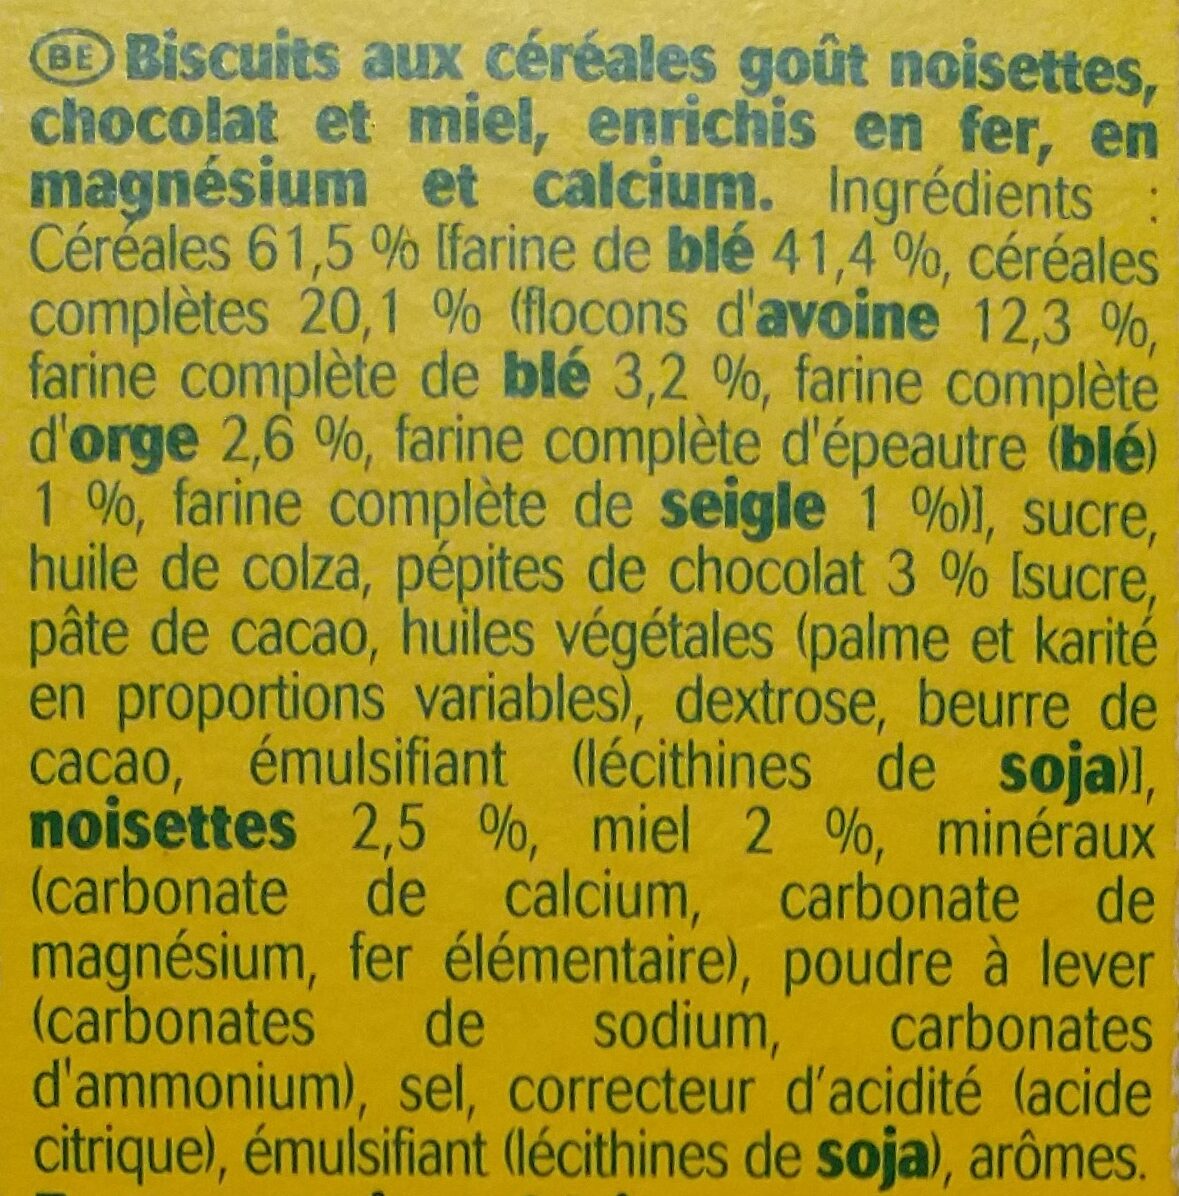 BelVita original miel choco-noisettes - Ingrédients